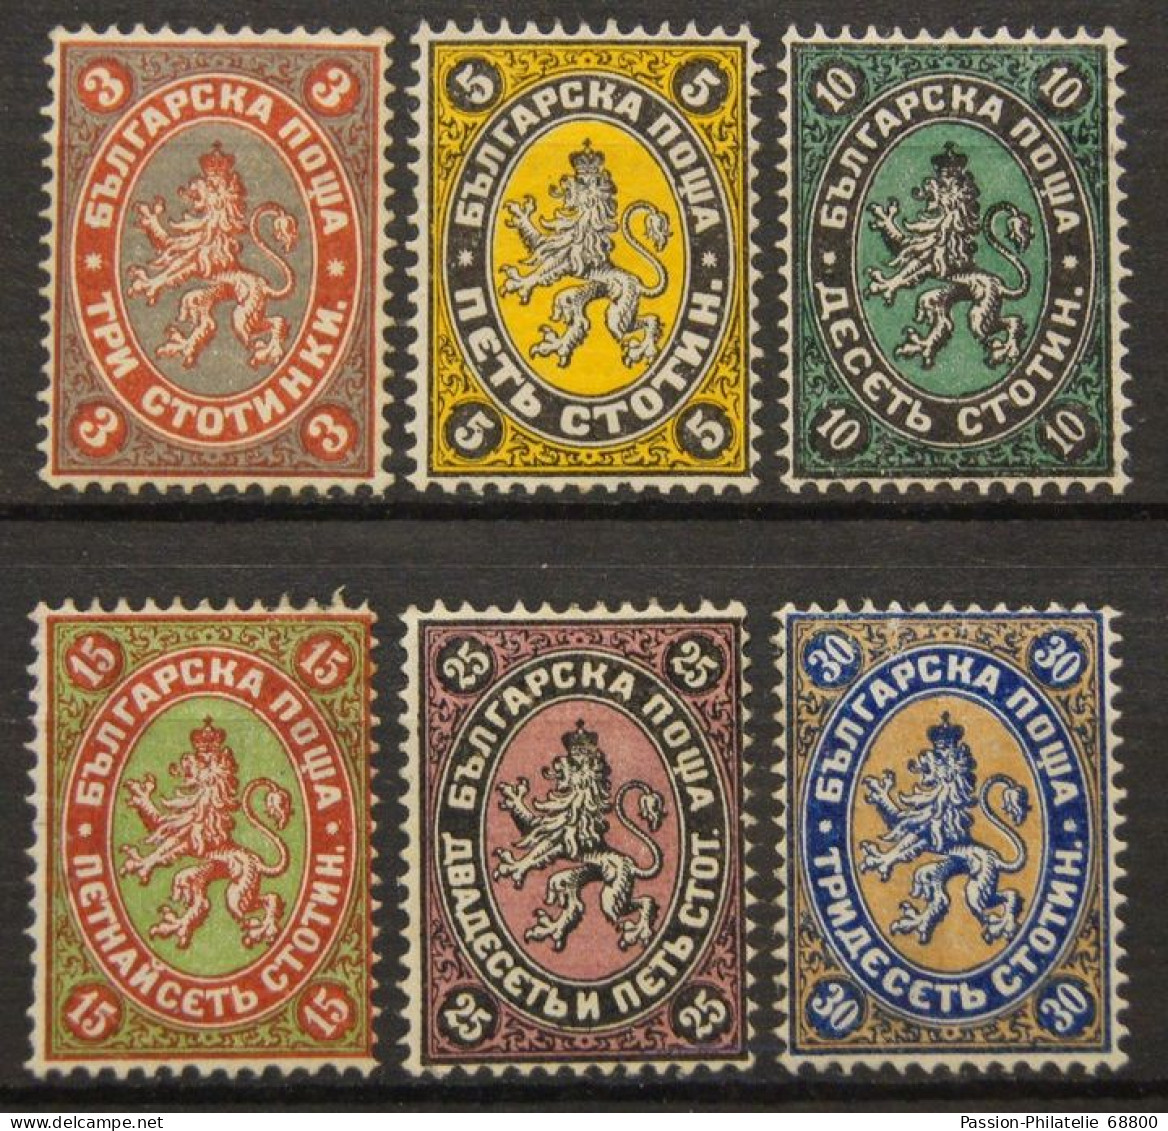 BULGARIA 1881 Mi # 6 - 7 - 8 - 9 - 10 - 11 Full Set MH ~ BULGARIEN ~ BULGARIE - Unused Stamps